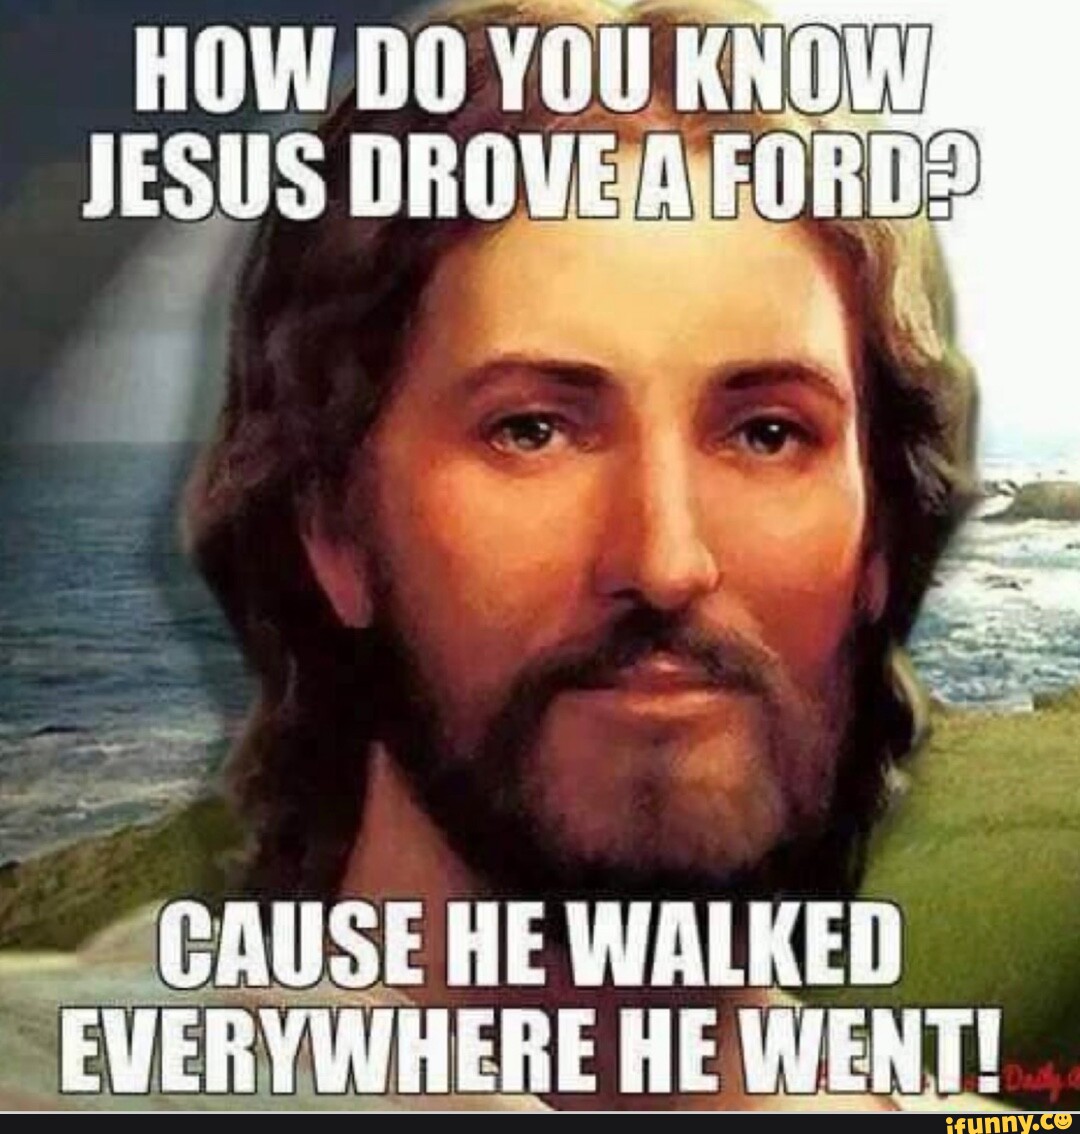 Everywhere he go. Do you know Jesus?.